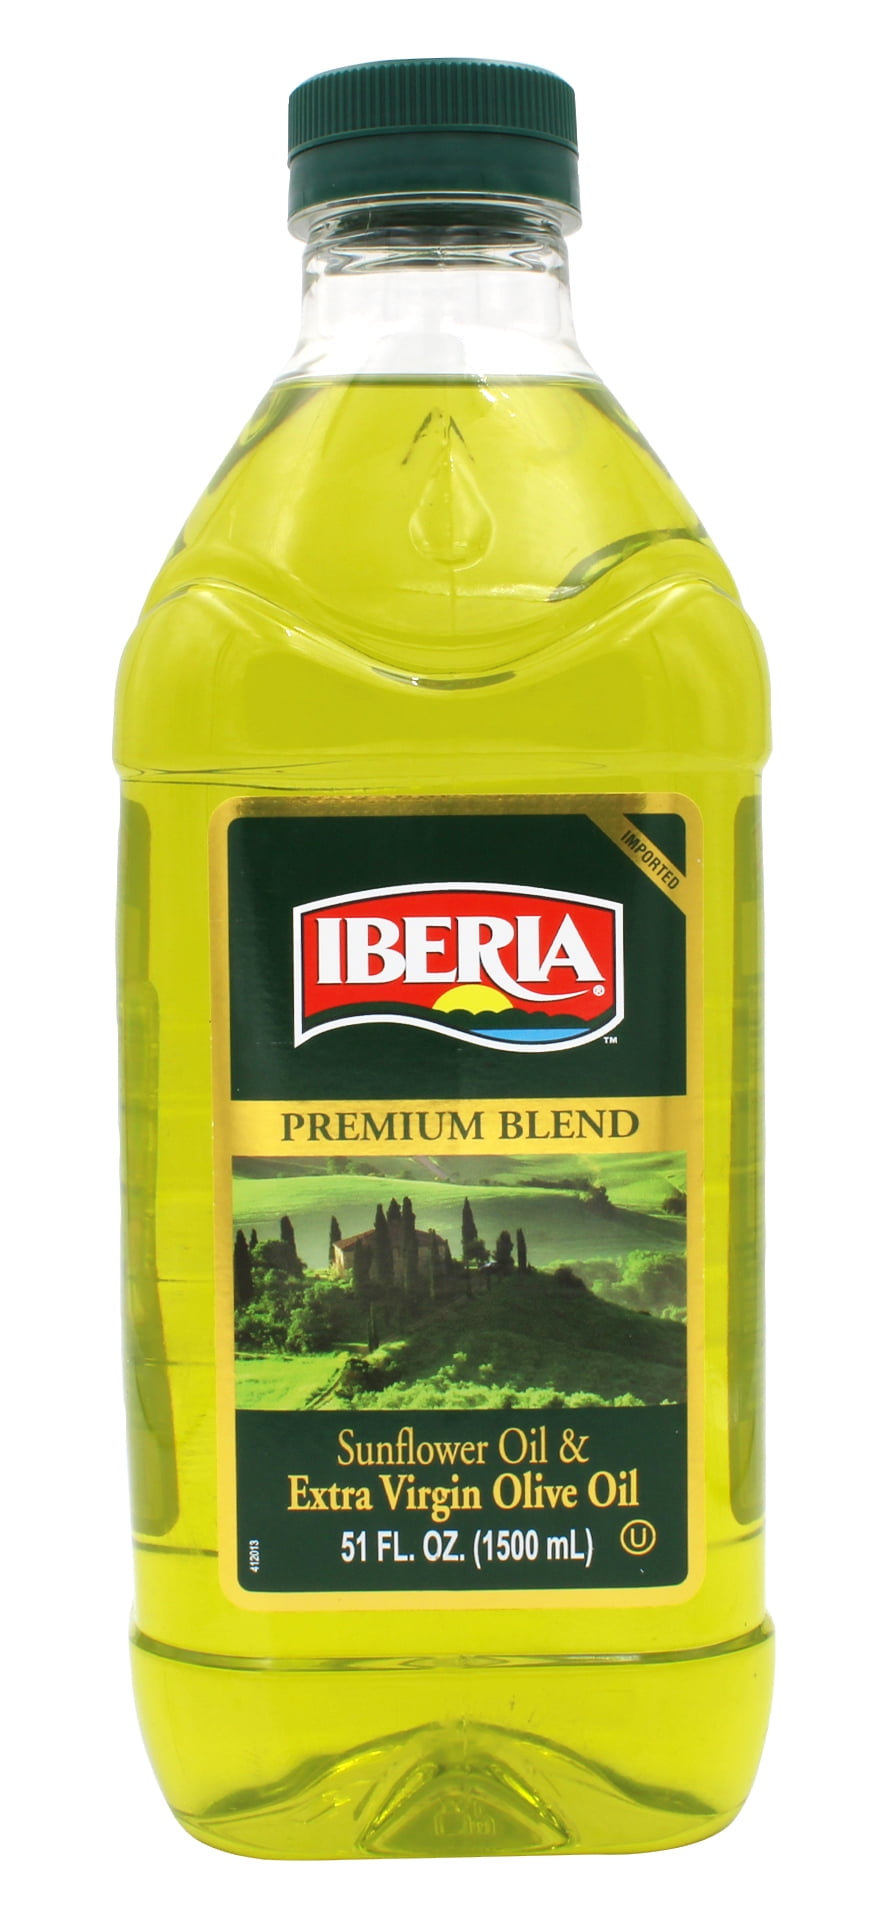 Iberia Premium Blend Sunflower Oil u0026 Extra Virgin Olive Oil